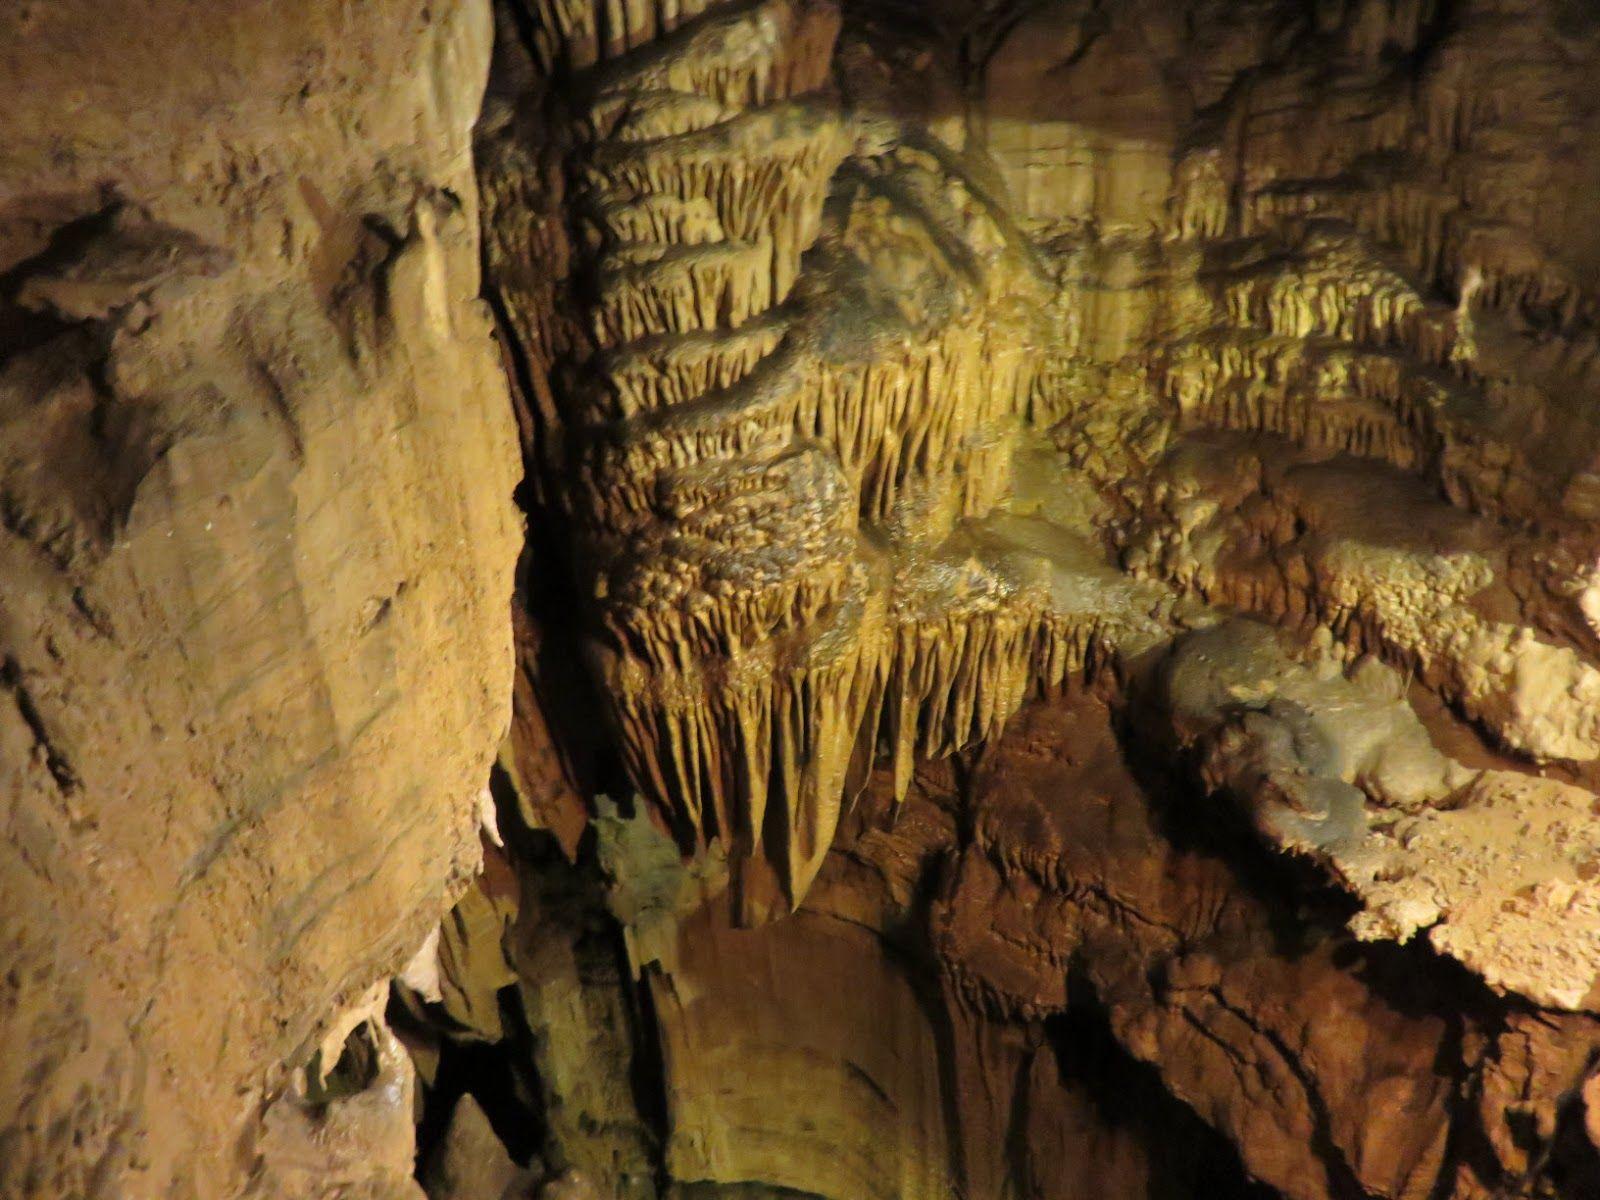 ShoreXplorers Mammoth Cave is